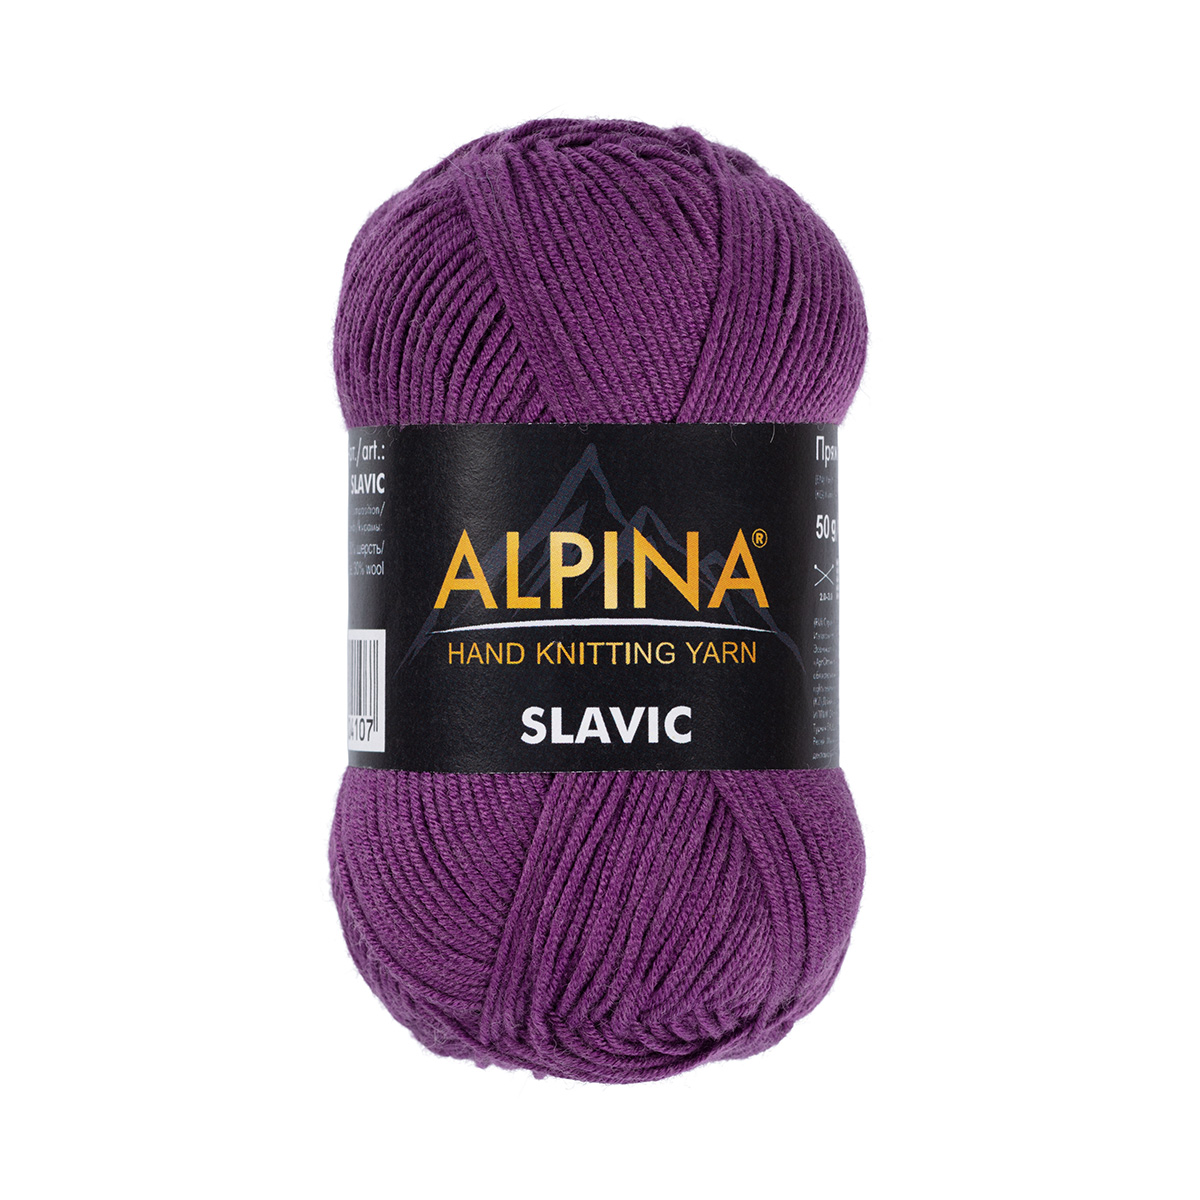 Пряжа ALPINA SLAVIC 70% вискоза, 30% шерсть 50 г 140 м Фото 1.